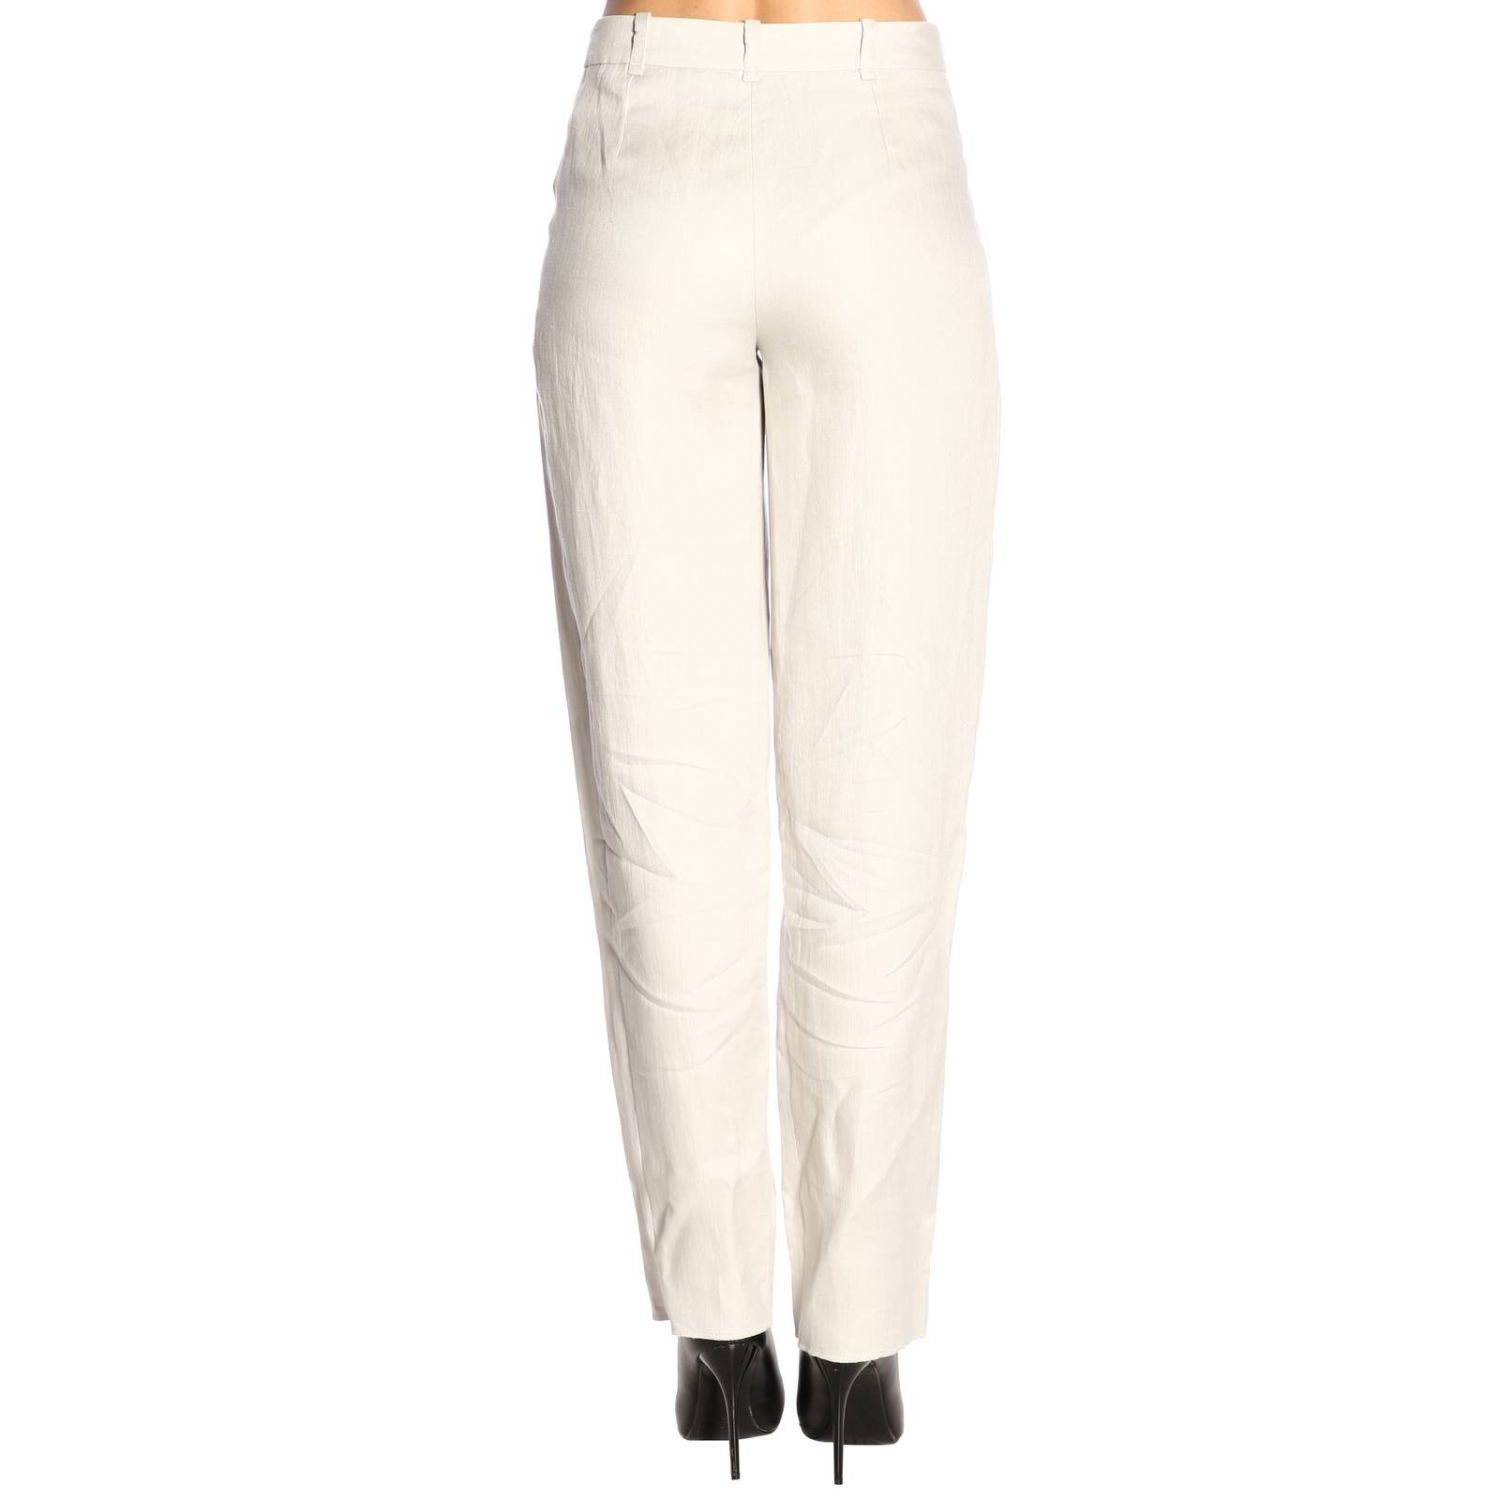 Emporio Armani Outlet: Pants women - Grey | Pants Emporio Armani 2NP17T ...